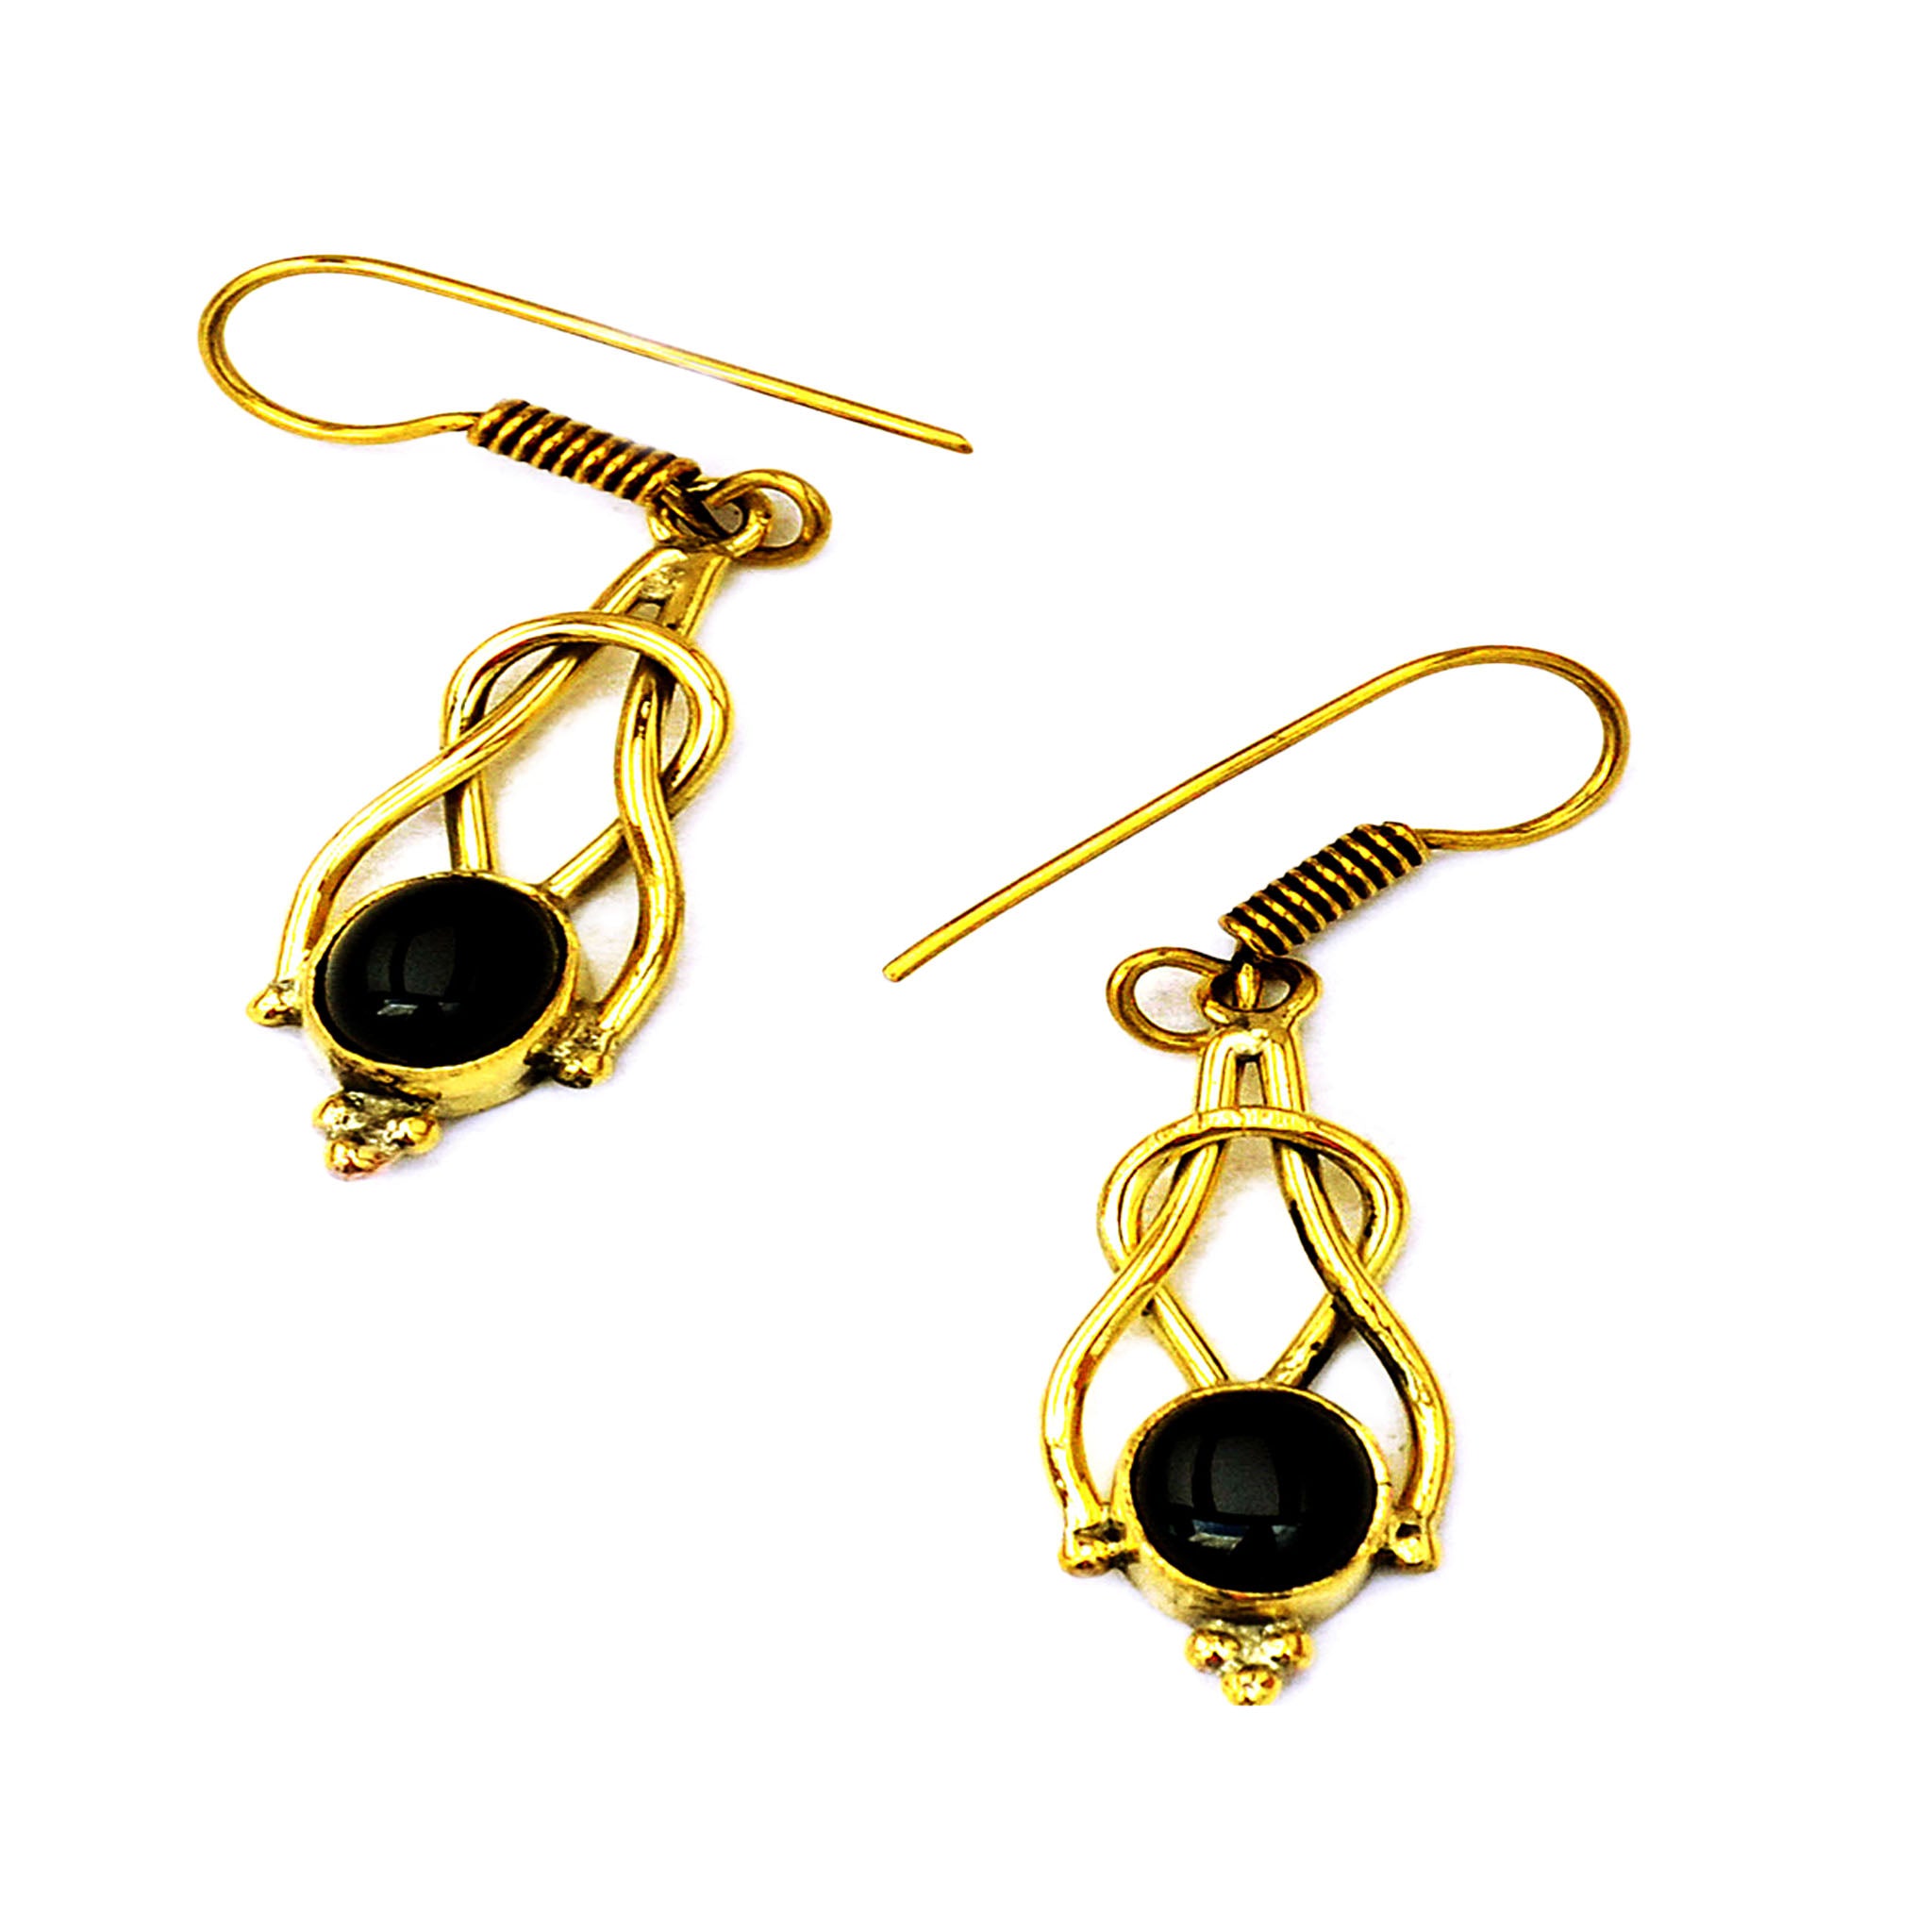 Brass drop earrings with stones